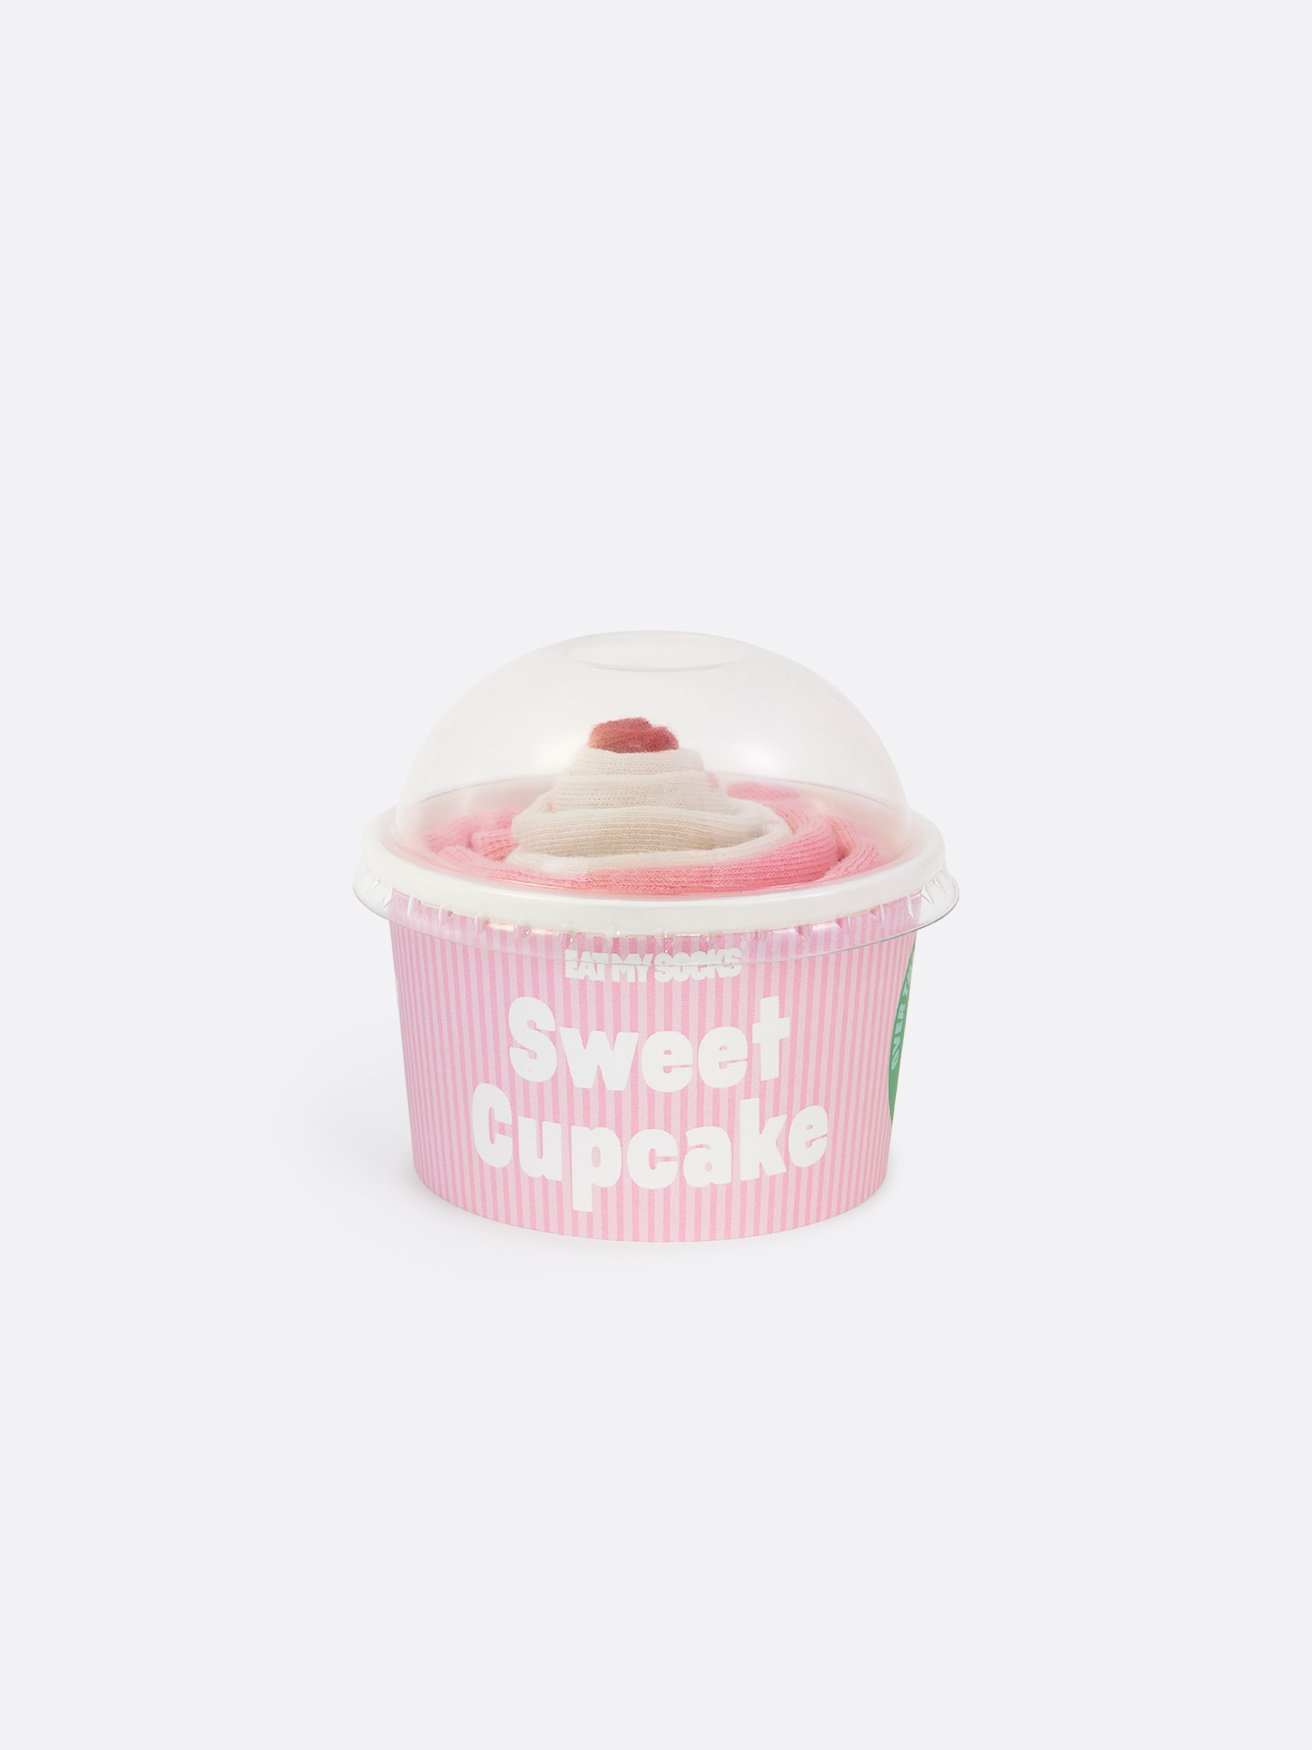 Eat My Socks - Strawberry Cupcake - Pink - One size